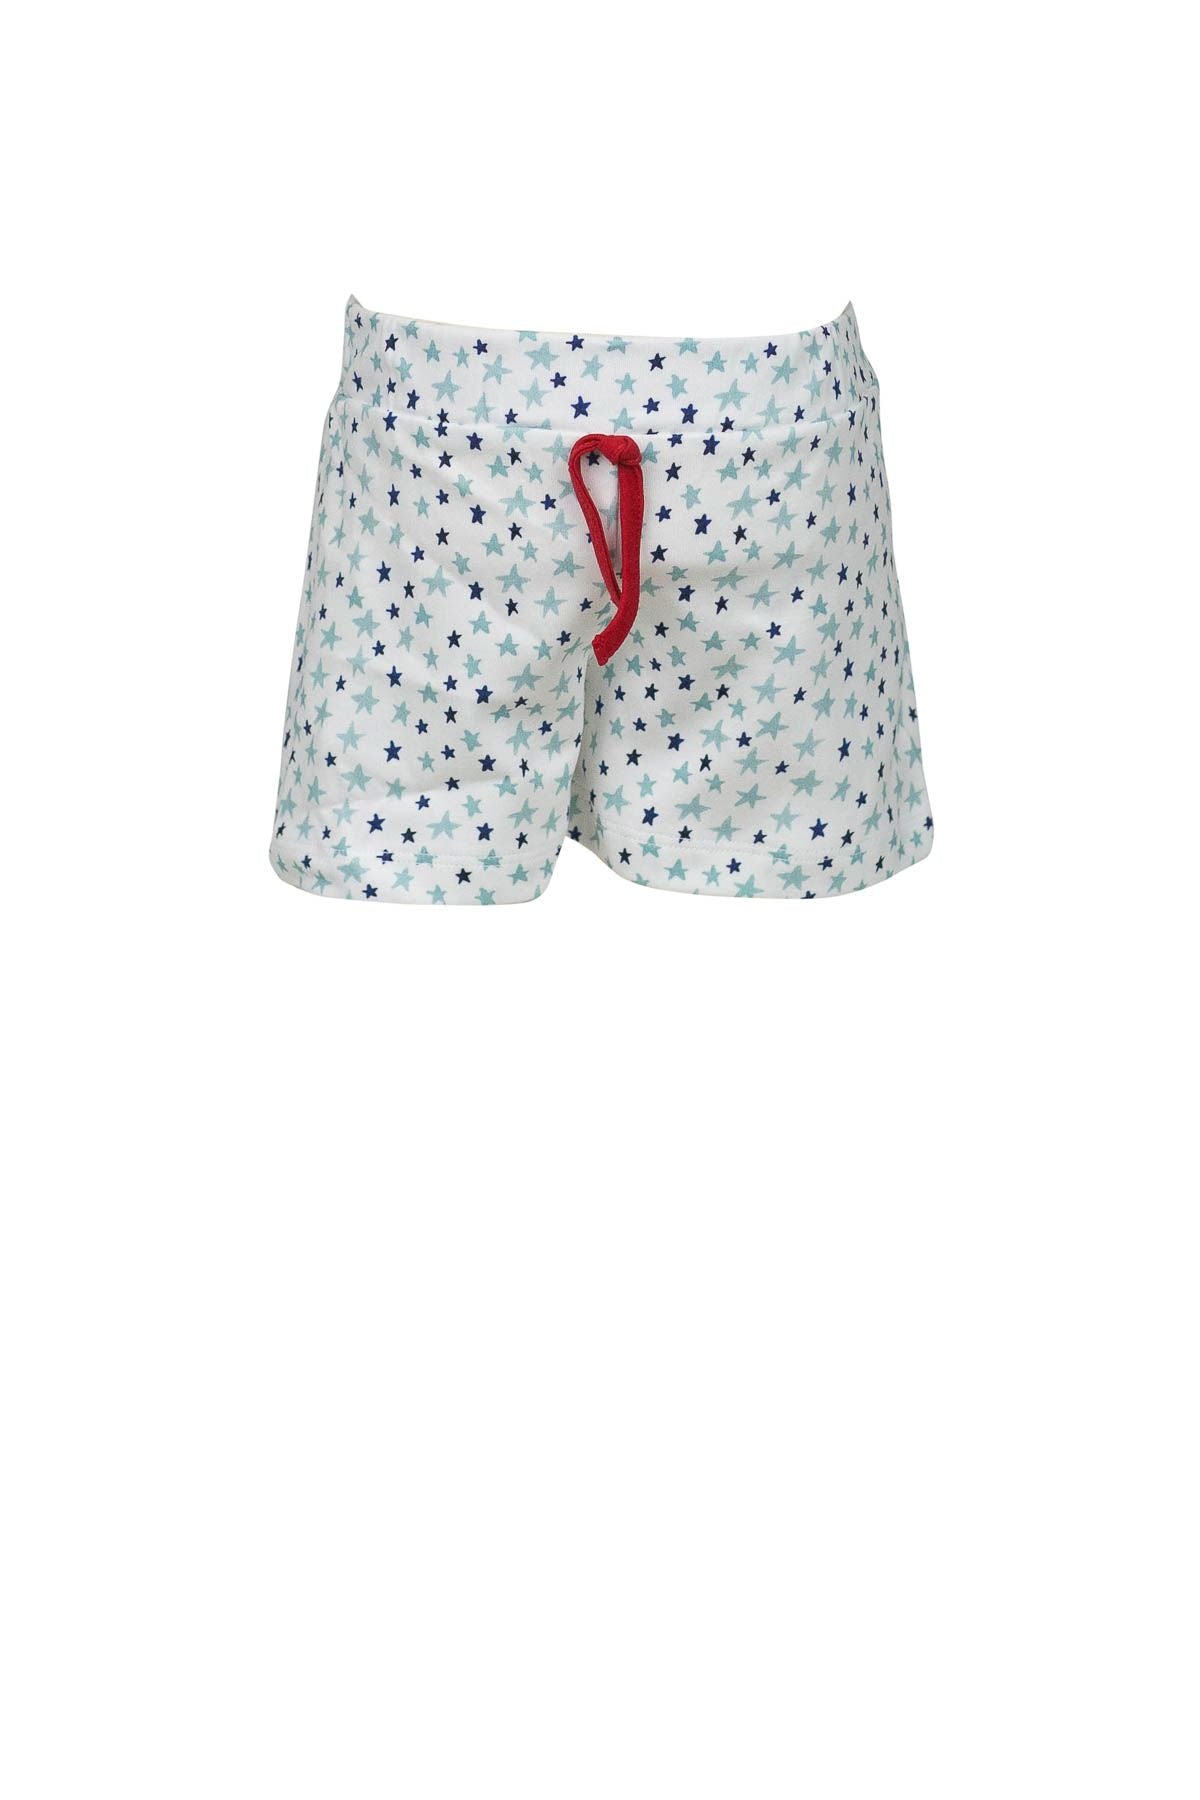 Pima Sparkle Boy Shorts